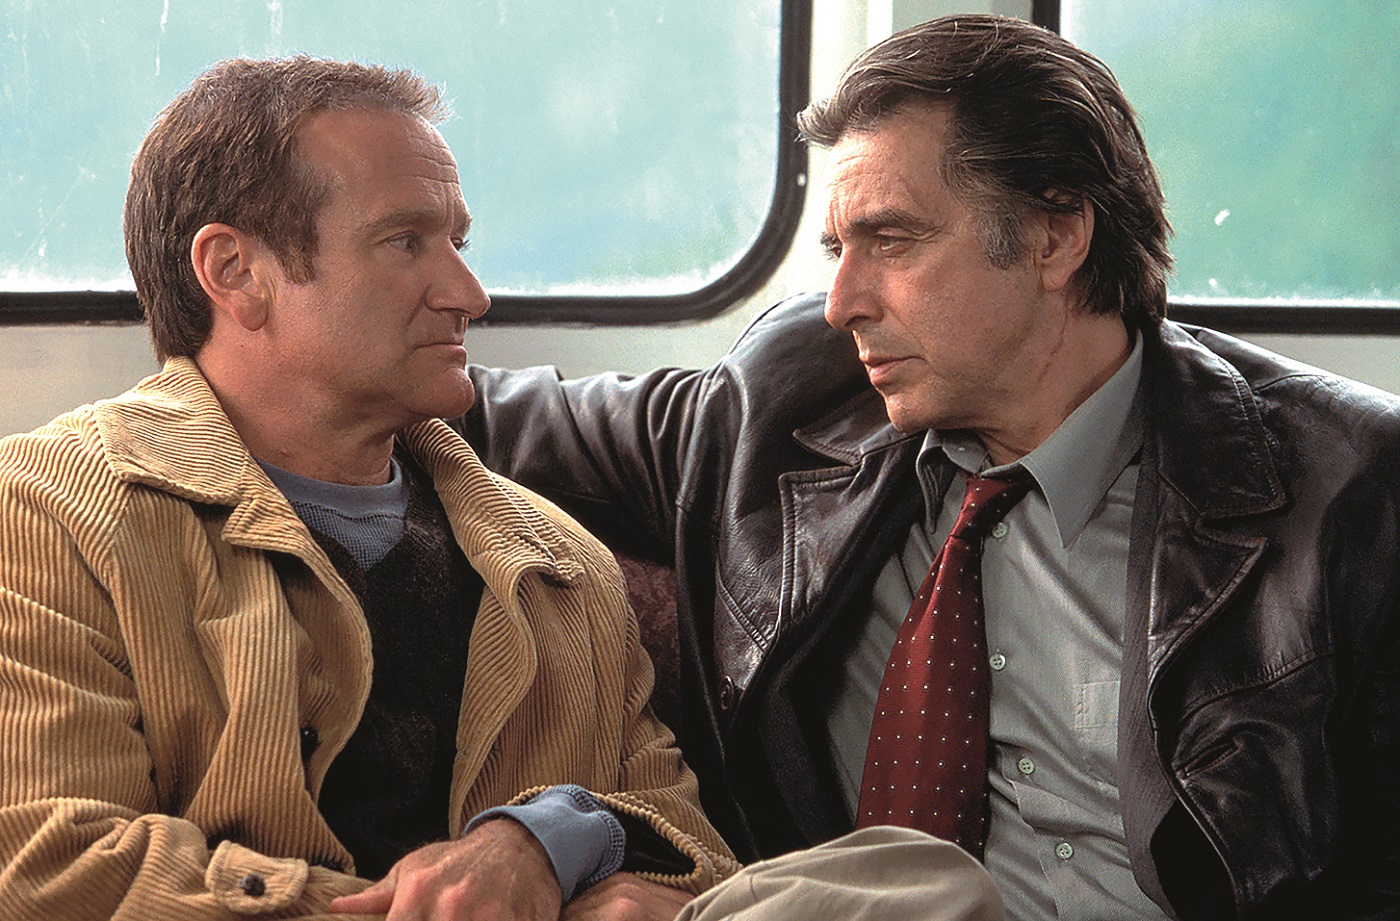 INSOMNIA, Robin Williams, Al Pacino, 2002
(c) Warner Brothers, courtesy Everett Collection